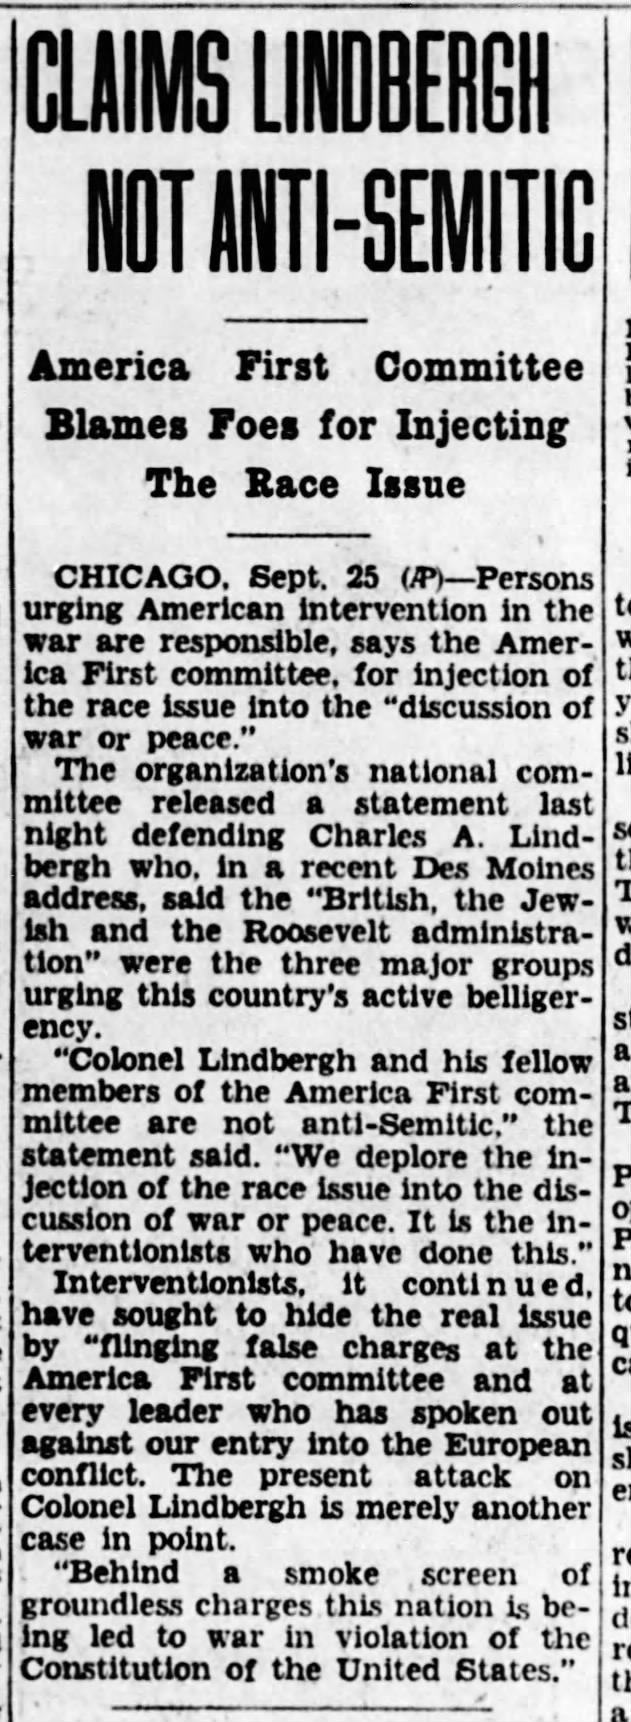 Claims Lindbergh Not Anti-Semitic